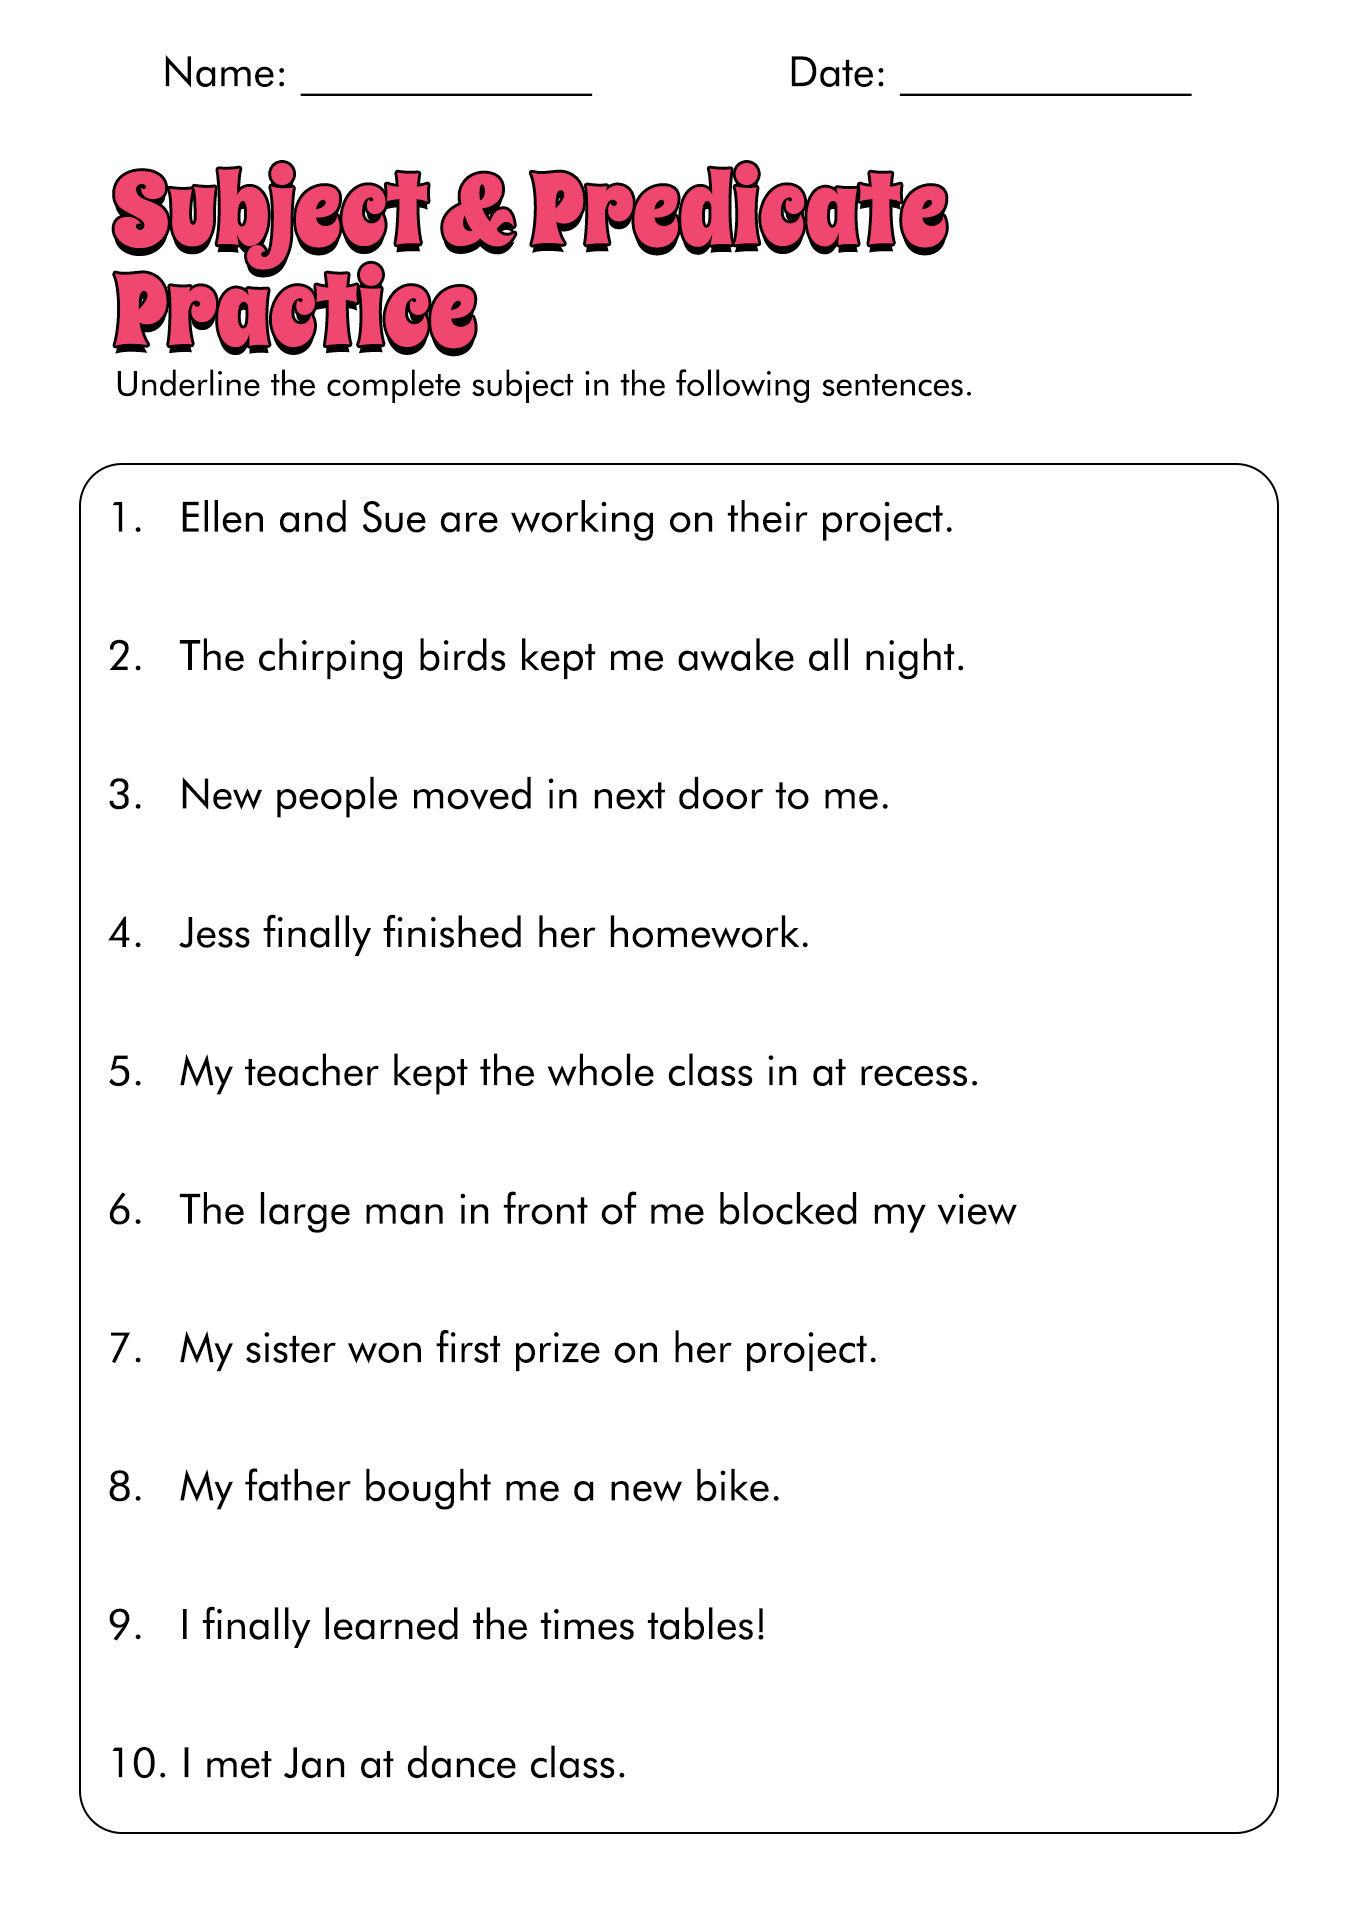 Subject and Predicate Sentences Worksheets Image